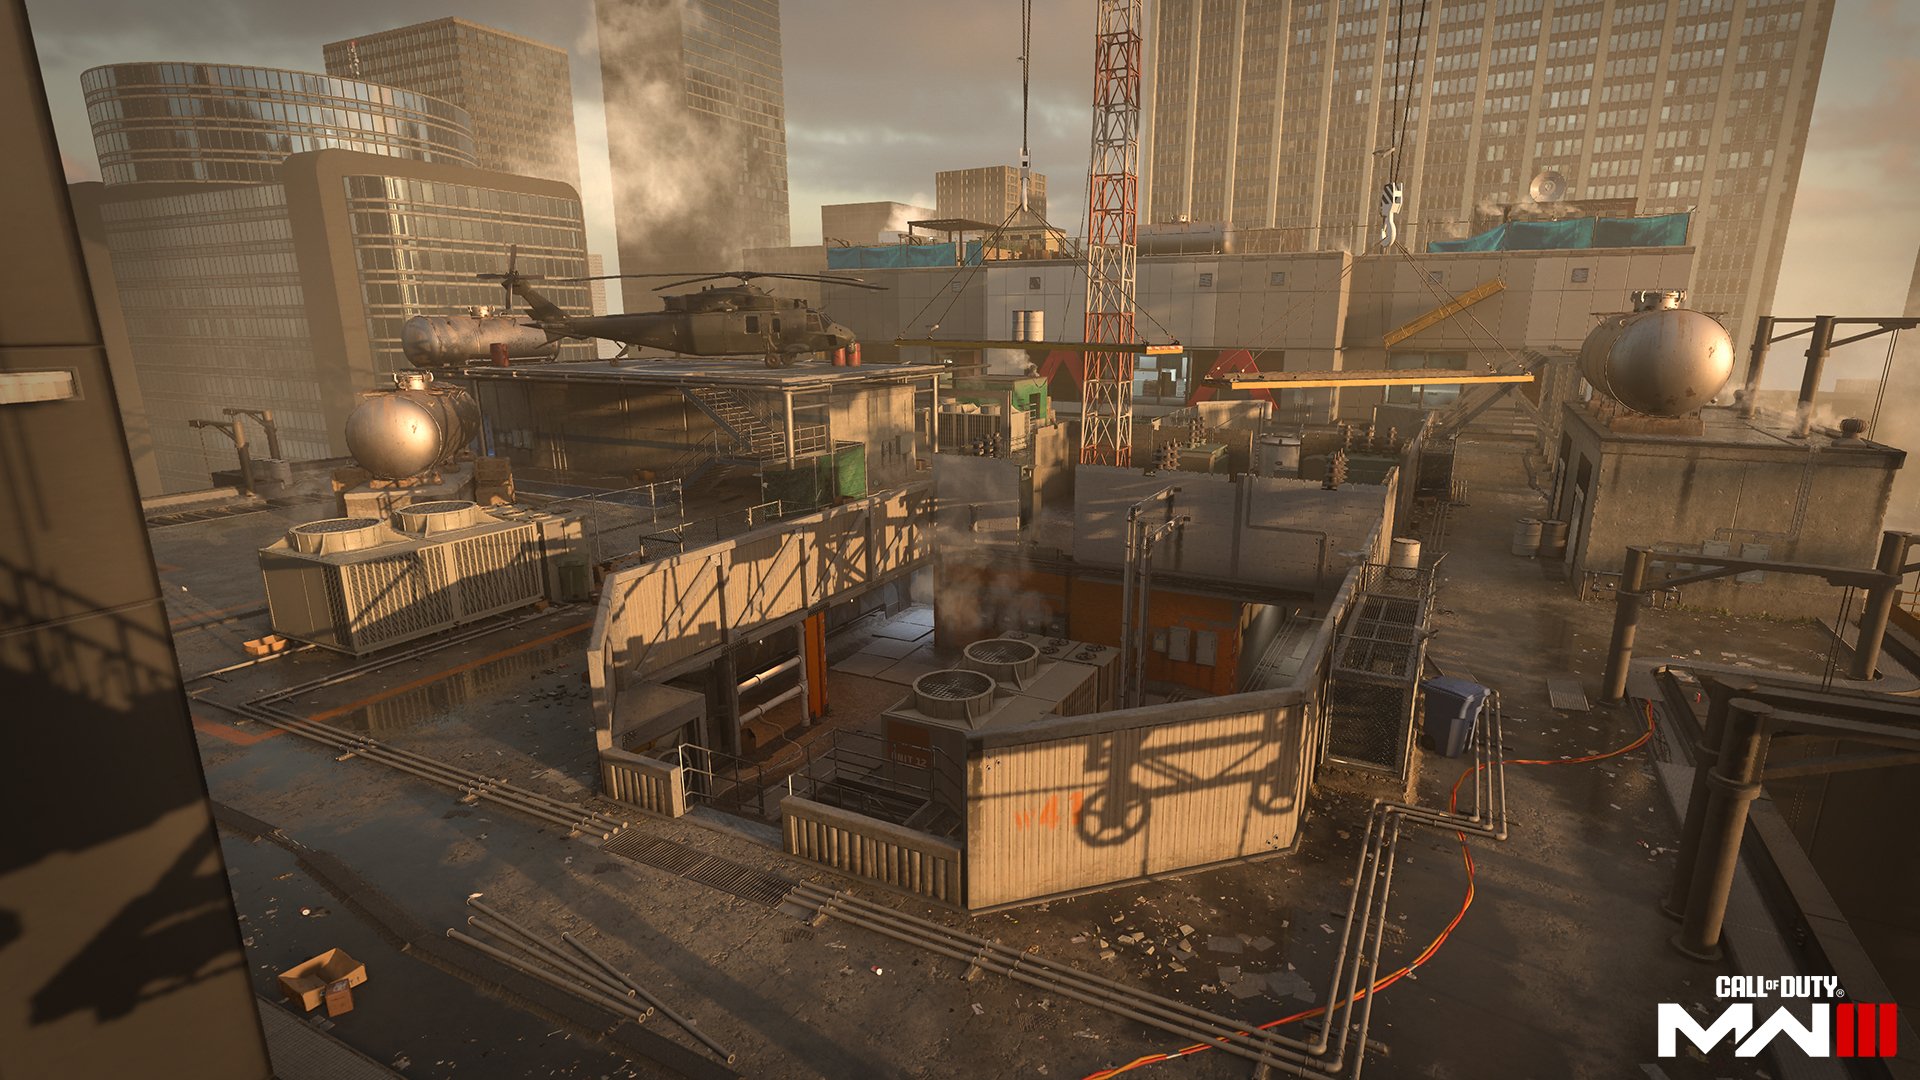 Gameplay Trailer Revealed for Call of Duty: Modern Warfare III